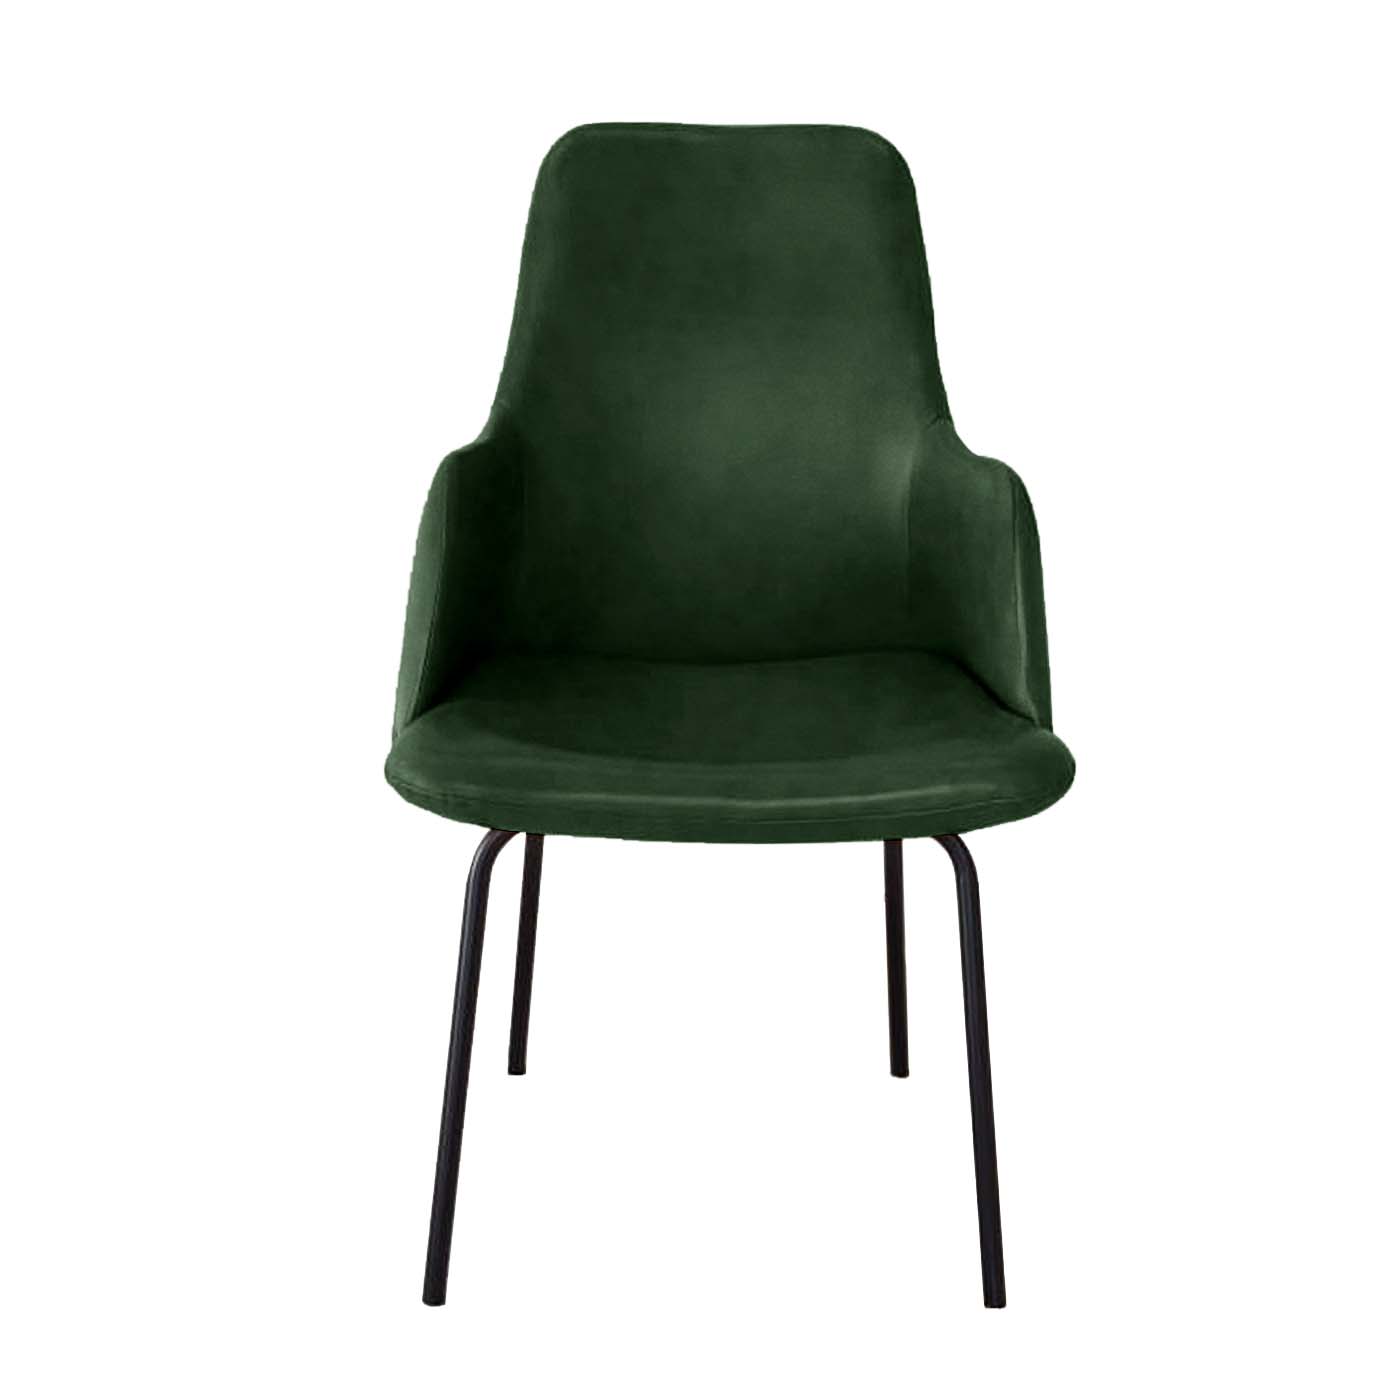 St. Pauli Textured Green Visitors Chair